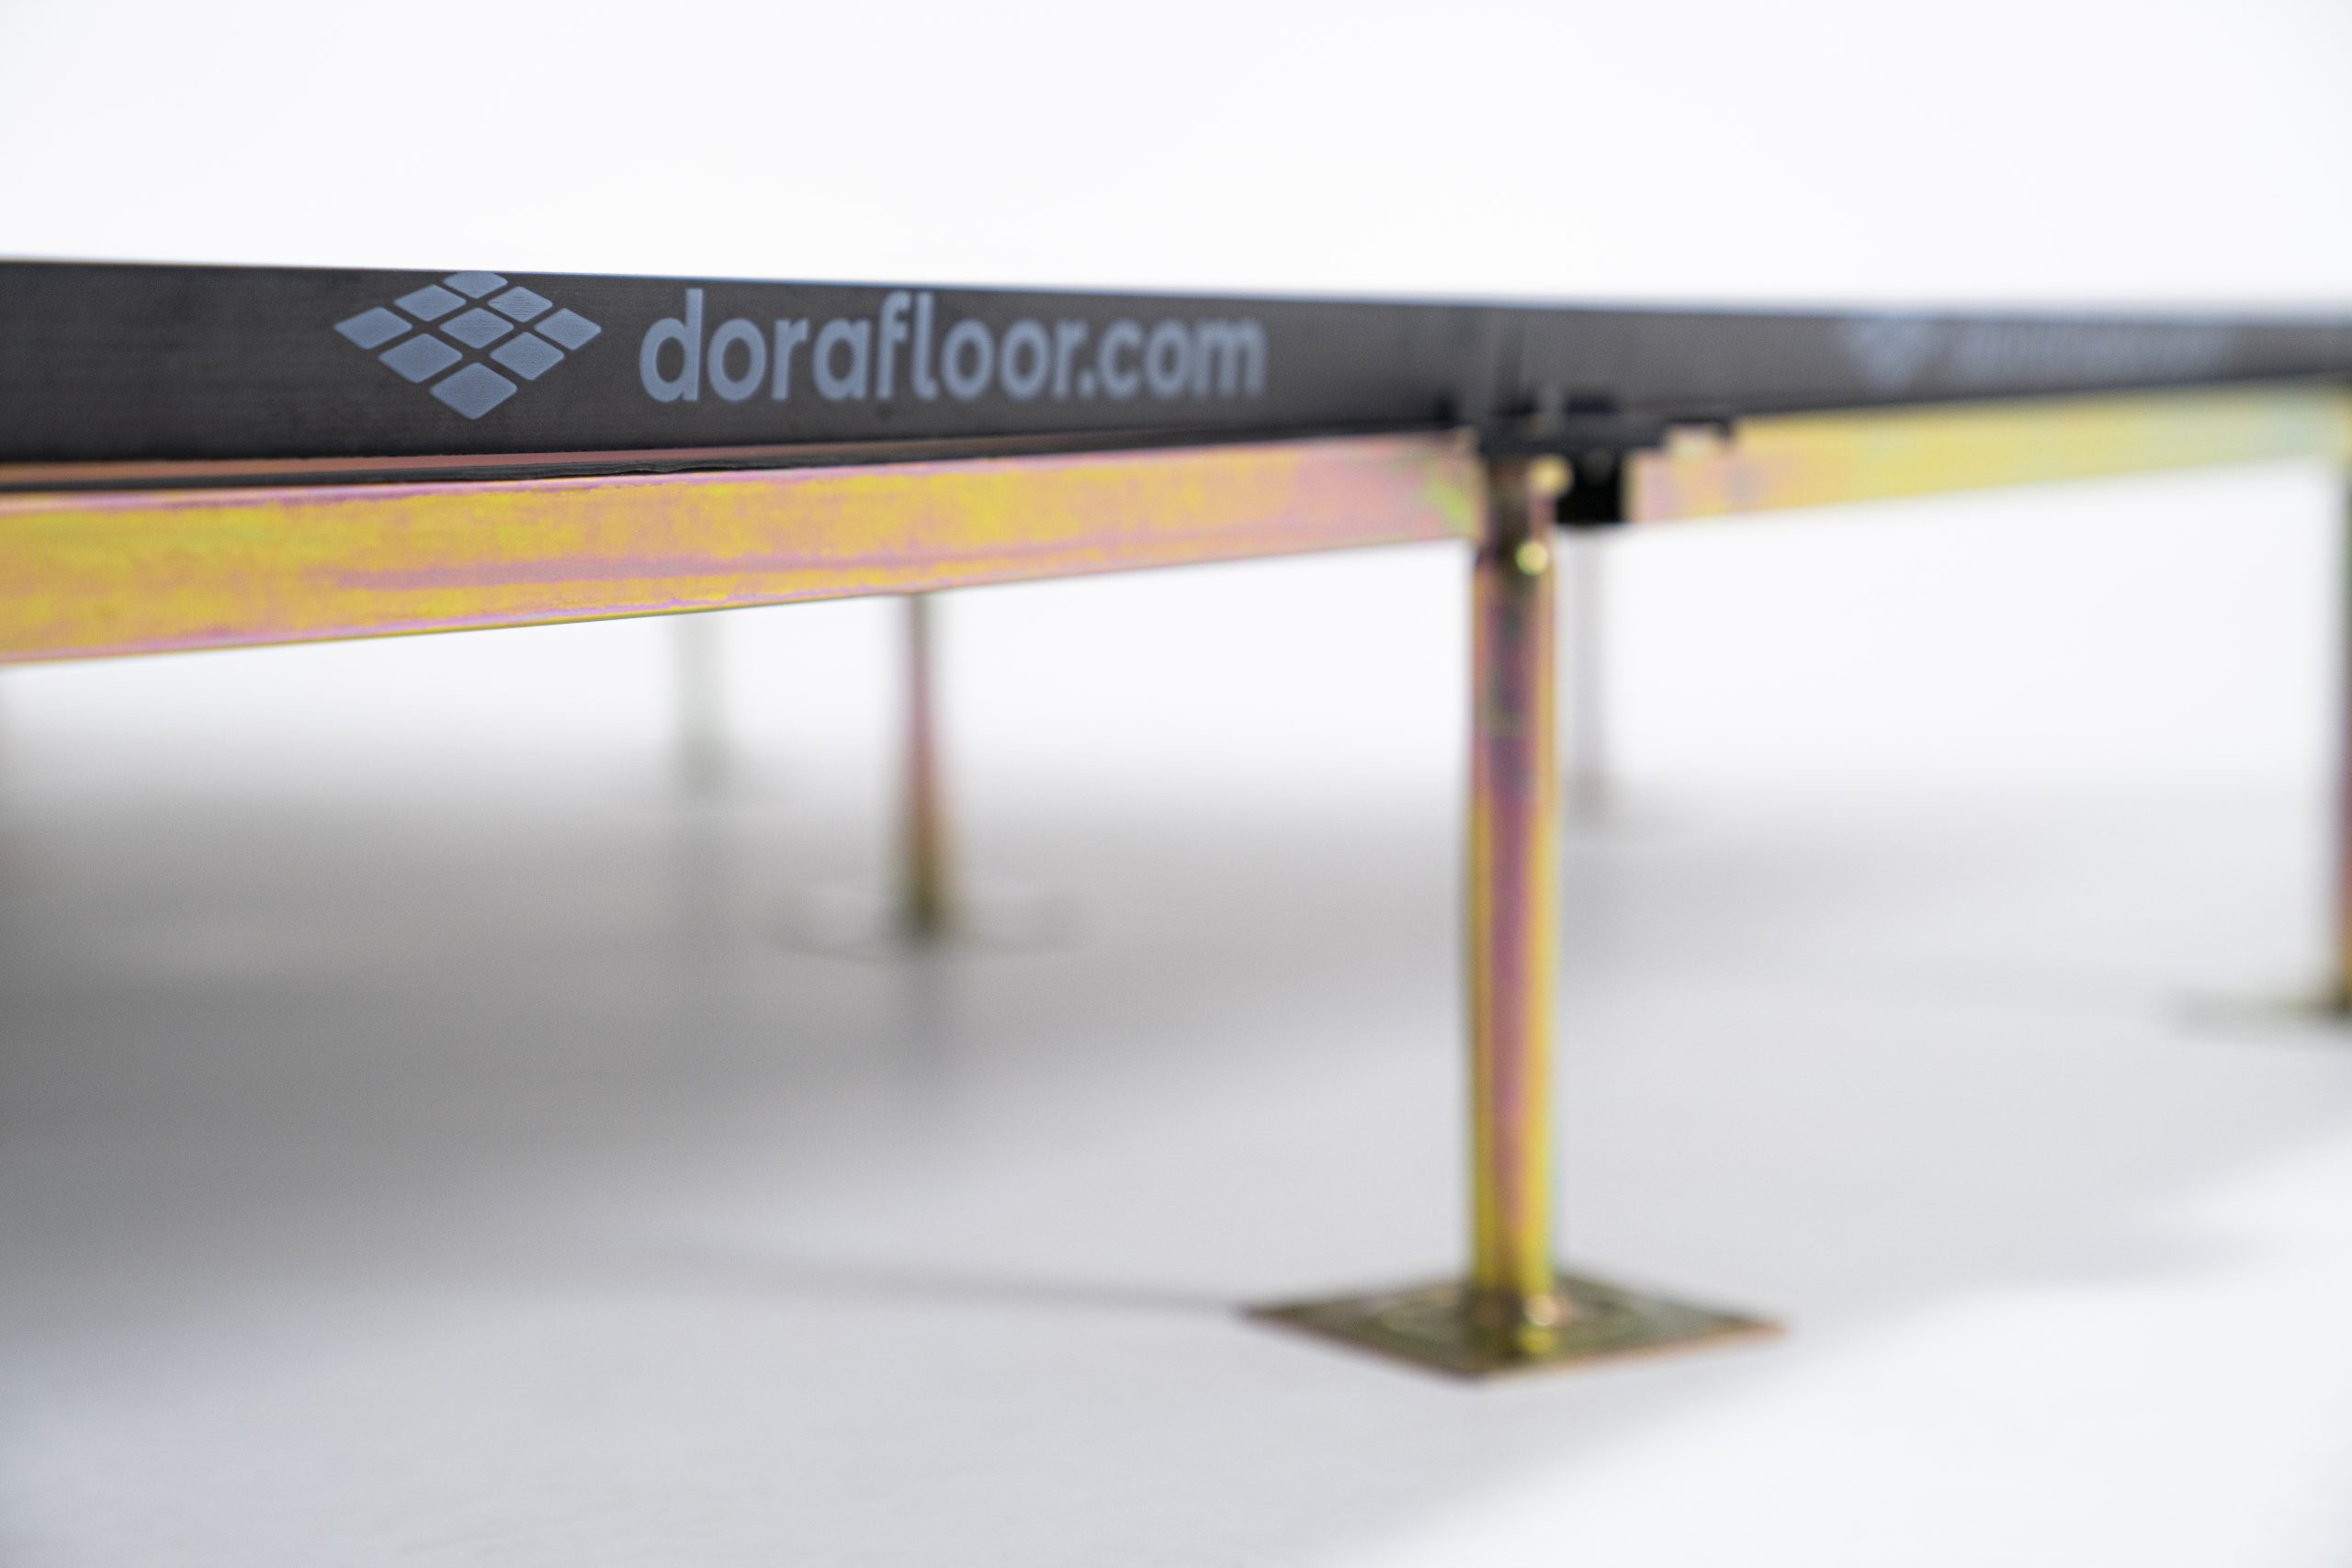 yukseltilmis doseme sistemleri dorafloor raised access floor systems scaled